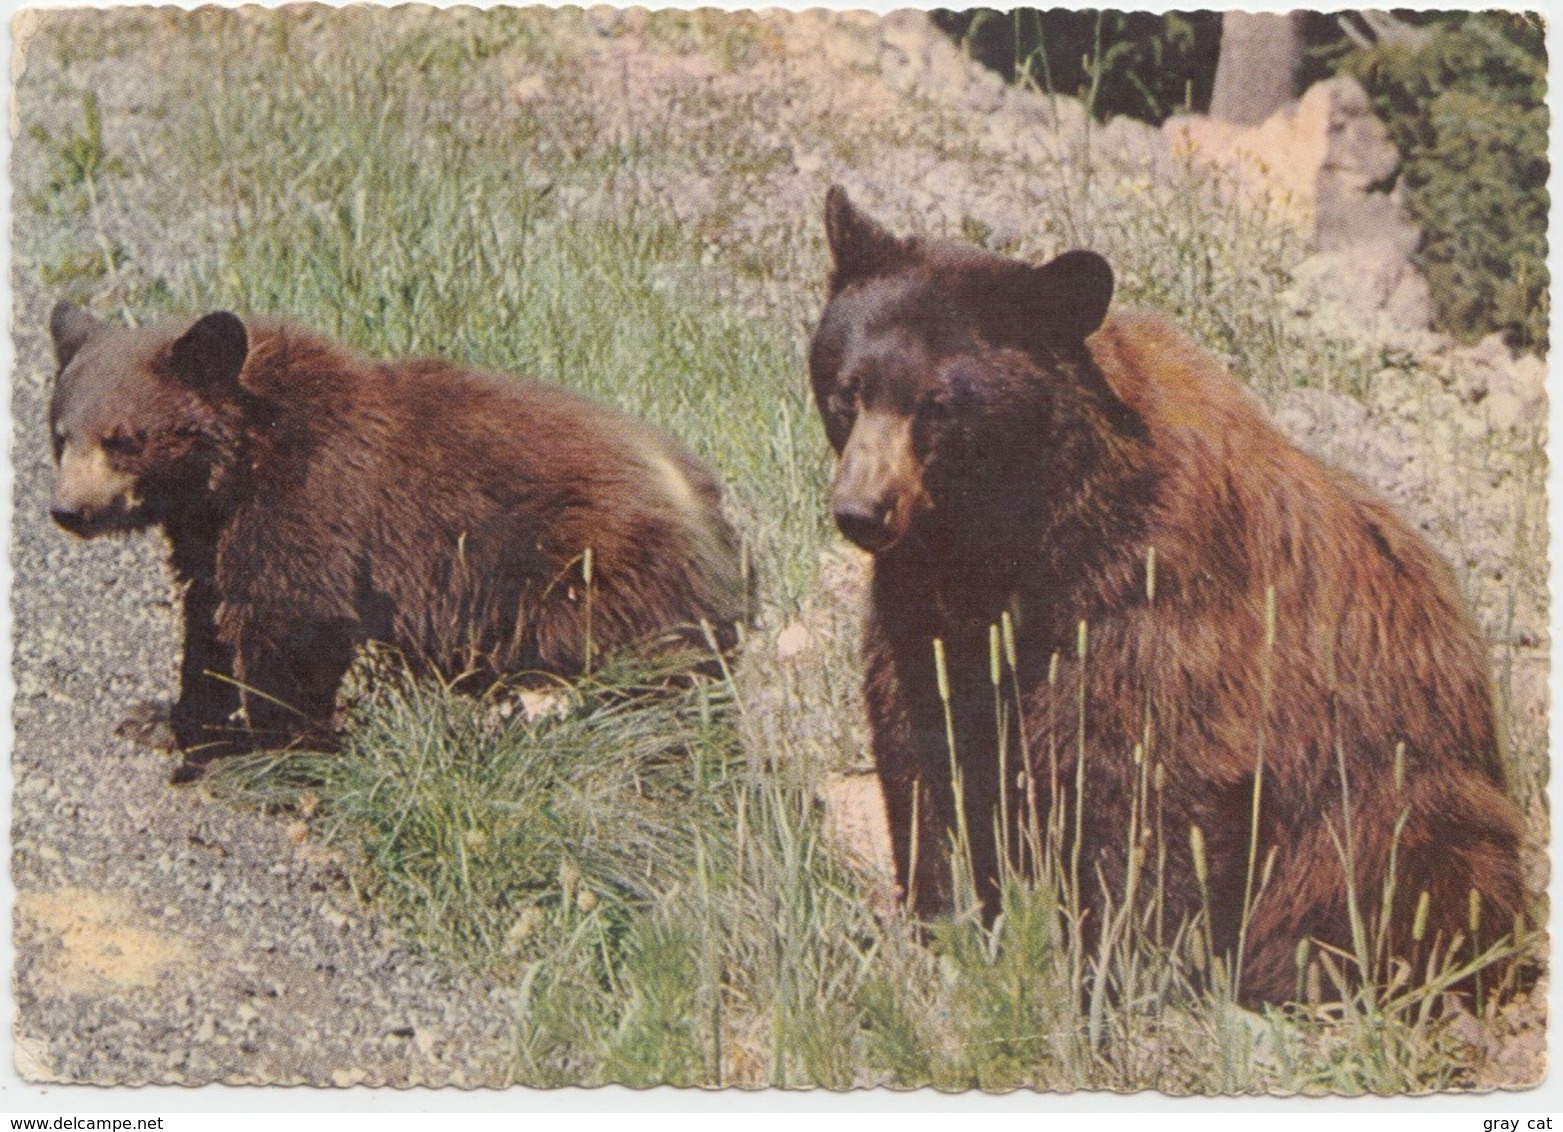 AMERICAN BLACK BEAR, Yosemite National Park, California, Unused Postcard [21443] - Bears